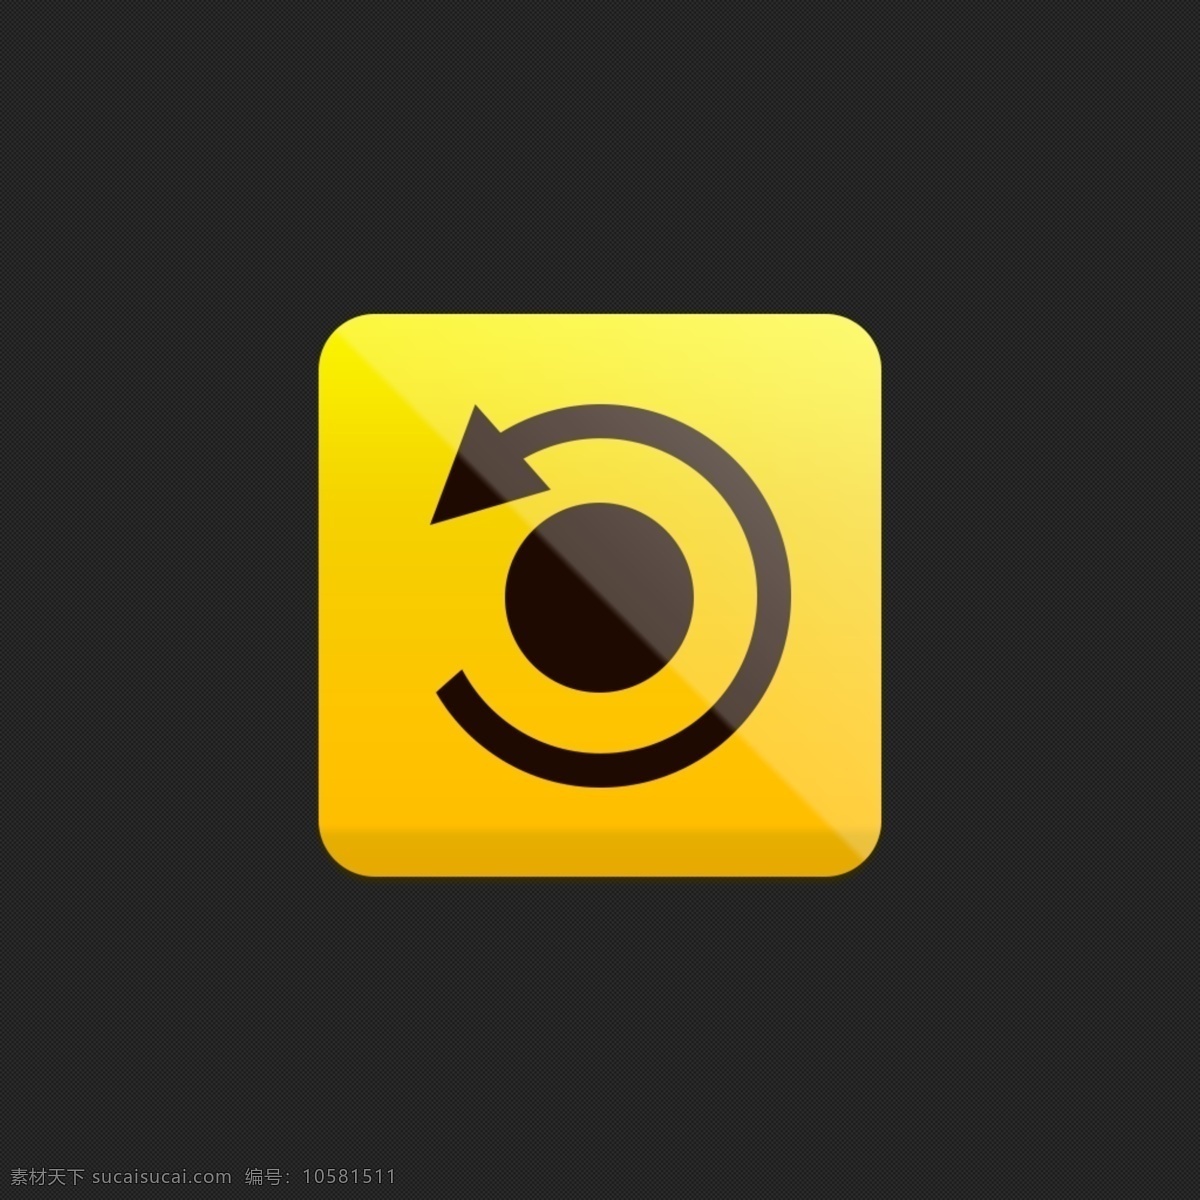 更新 上传 update 图标 icon 黄色 土黄